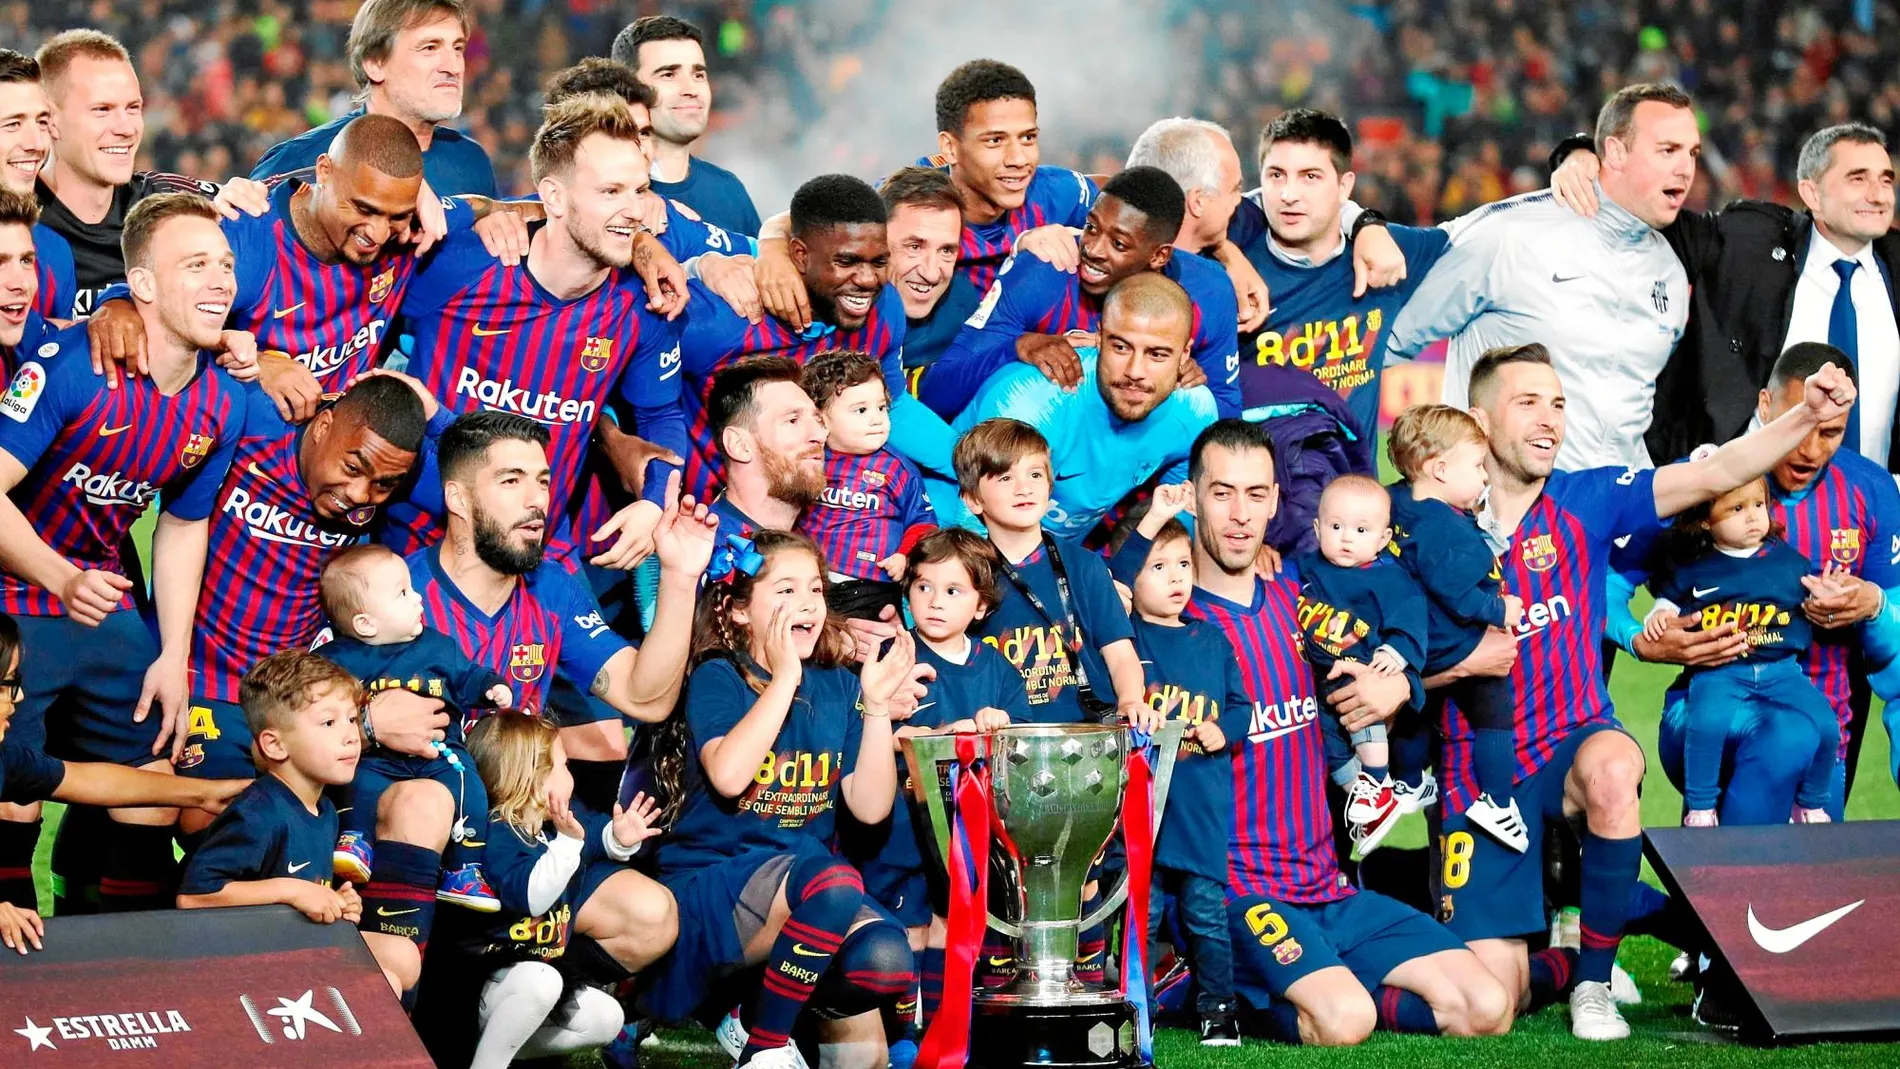 Soccer Football - La Liga Santander - FC Barcelona v Levante - Camp Nou, Barcelona, Spain - April 27, 2019 Barcelona celebrate winning La Liga with the trophy REUTERS/Albert Gea